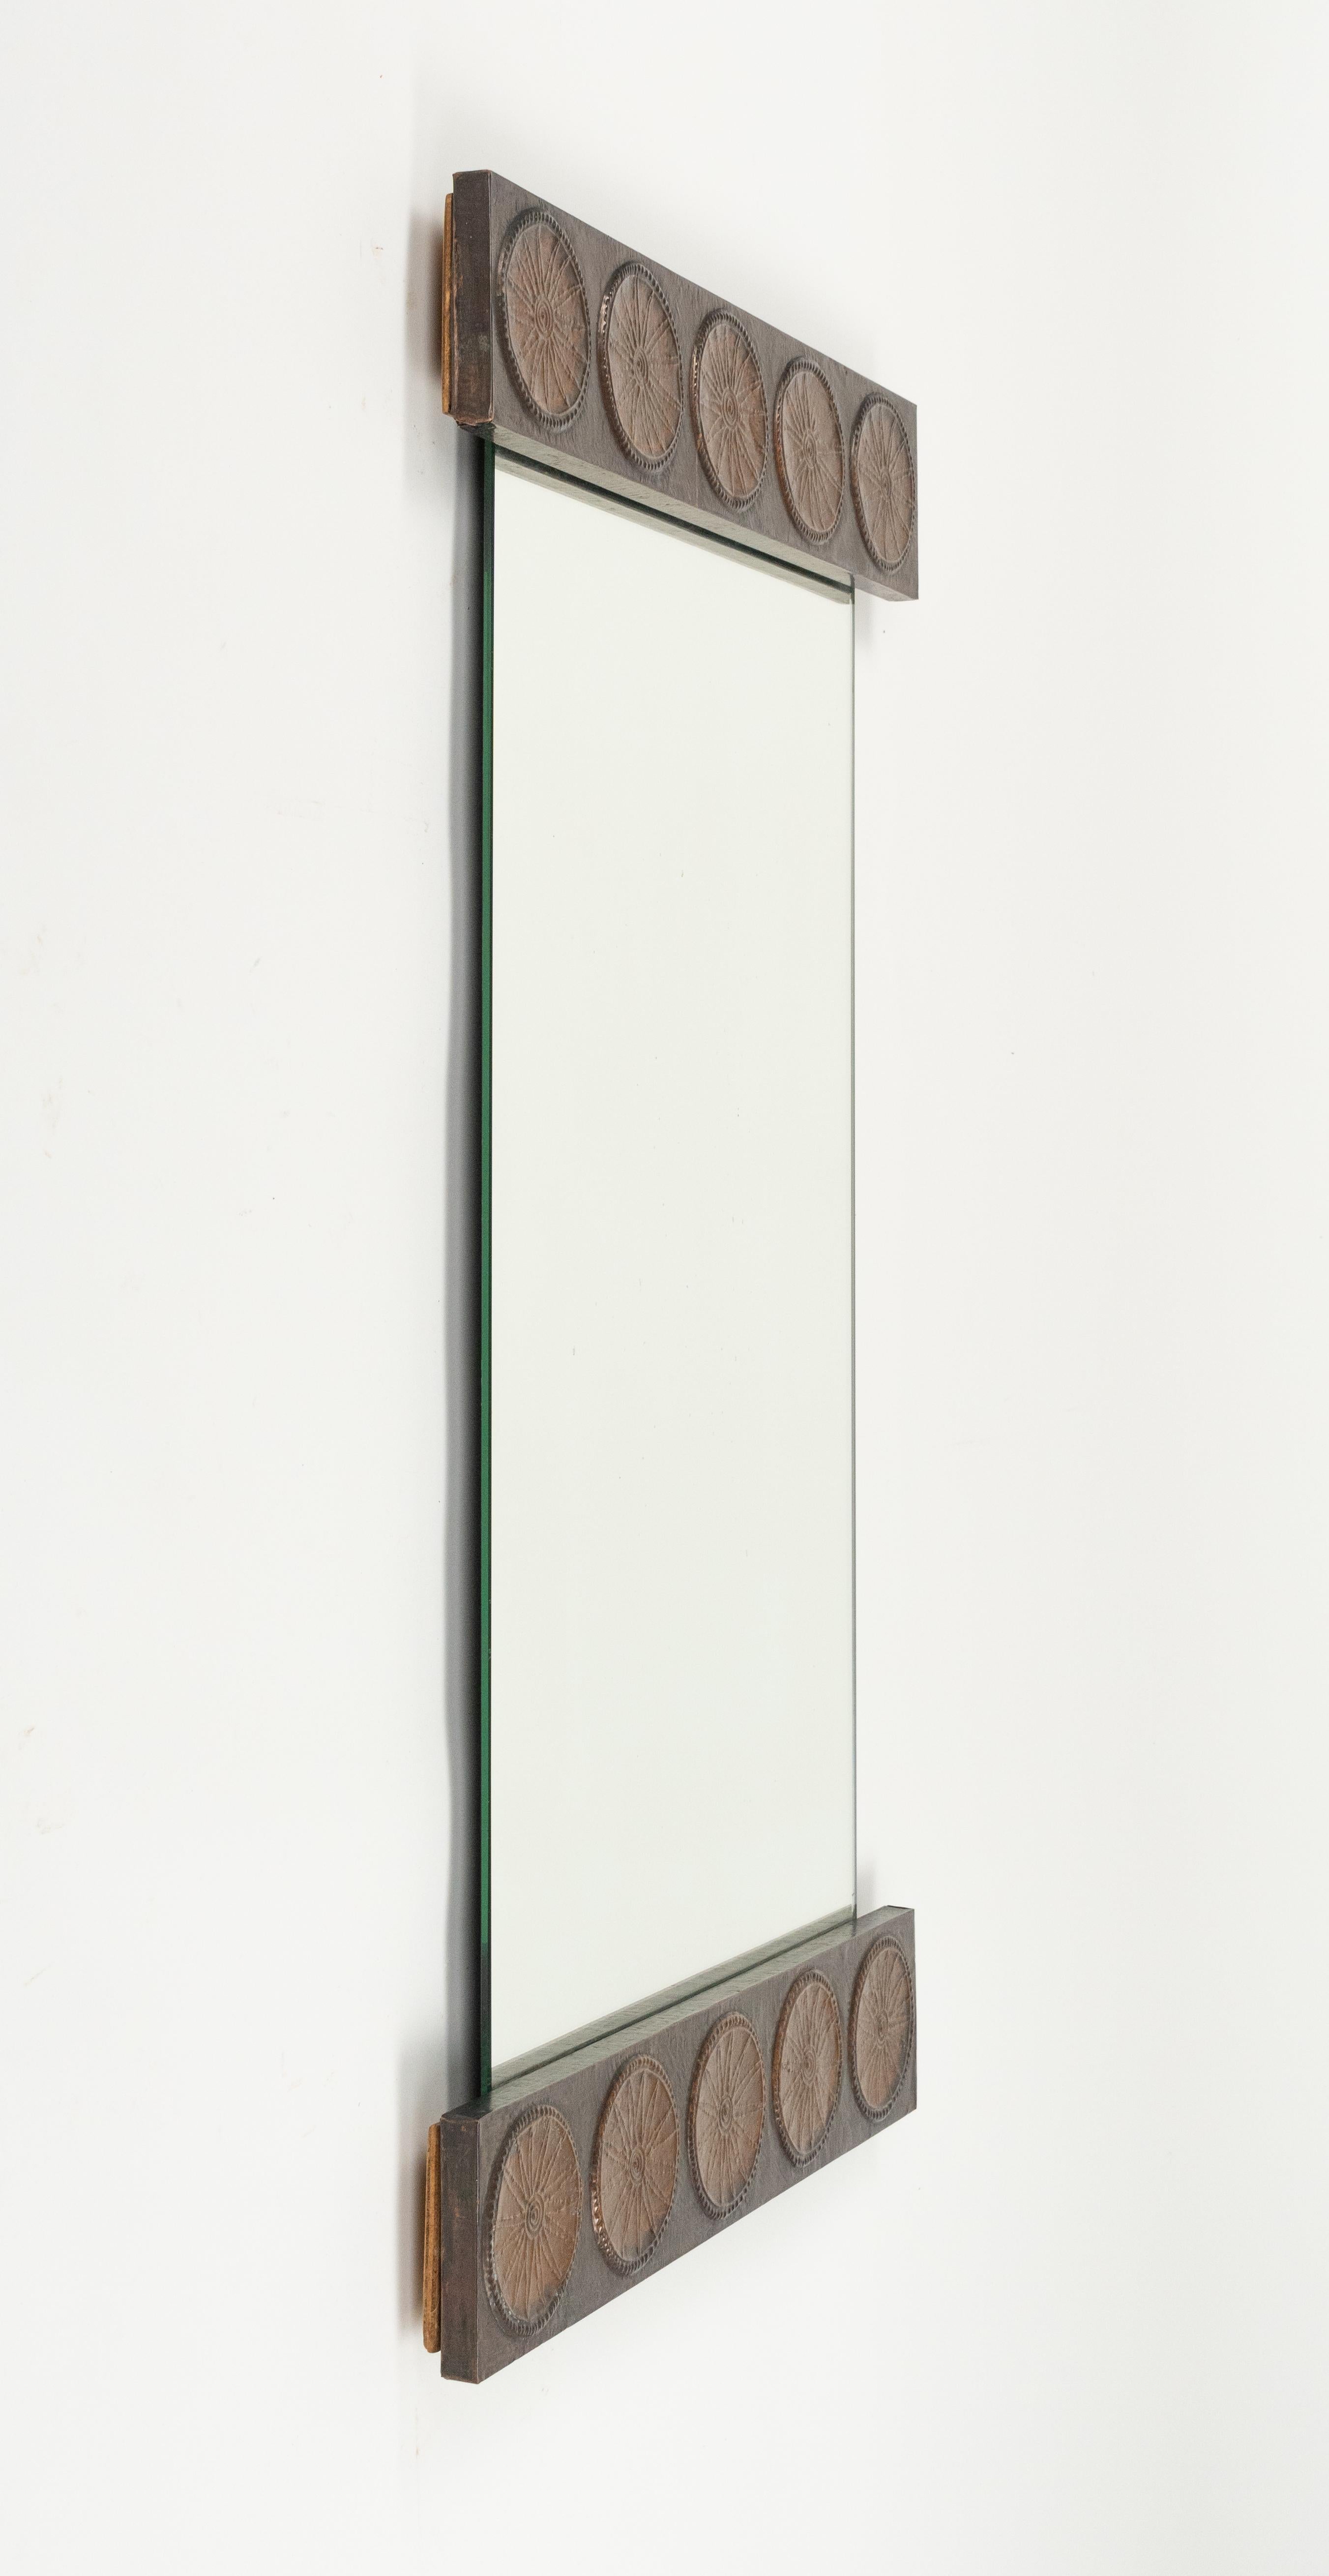 Italian Midcentury Wall Mirror in Copper by Santambrogio & De Berti, Italy, 1960s For Sale